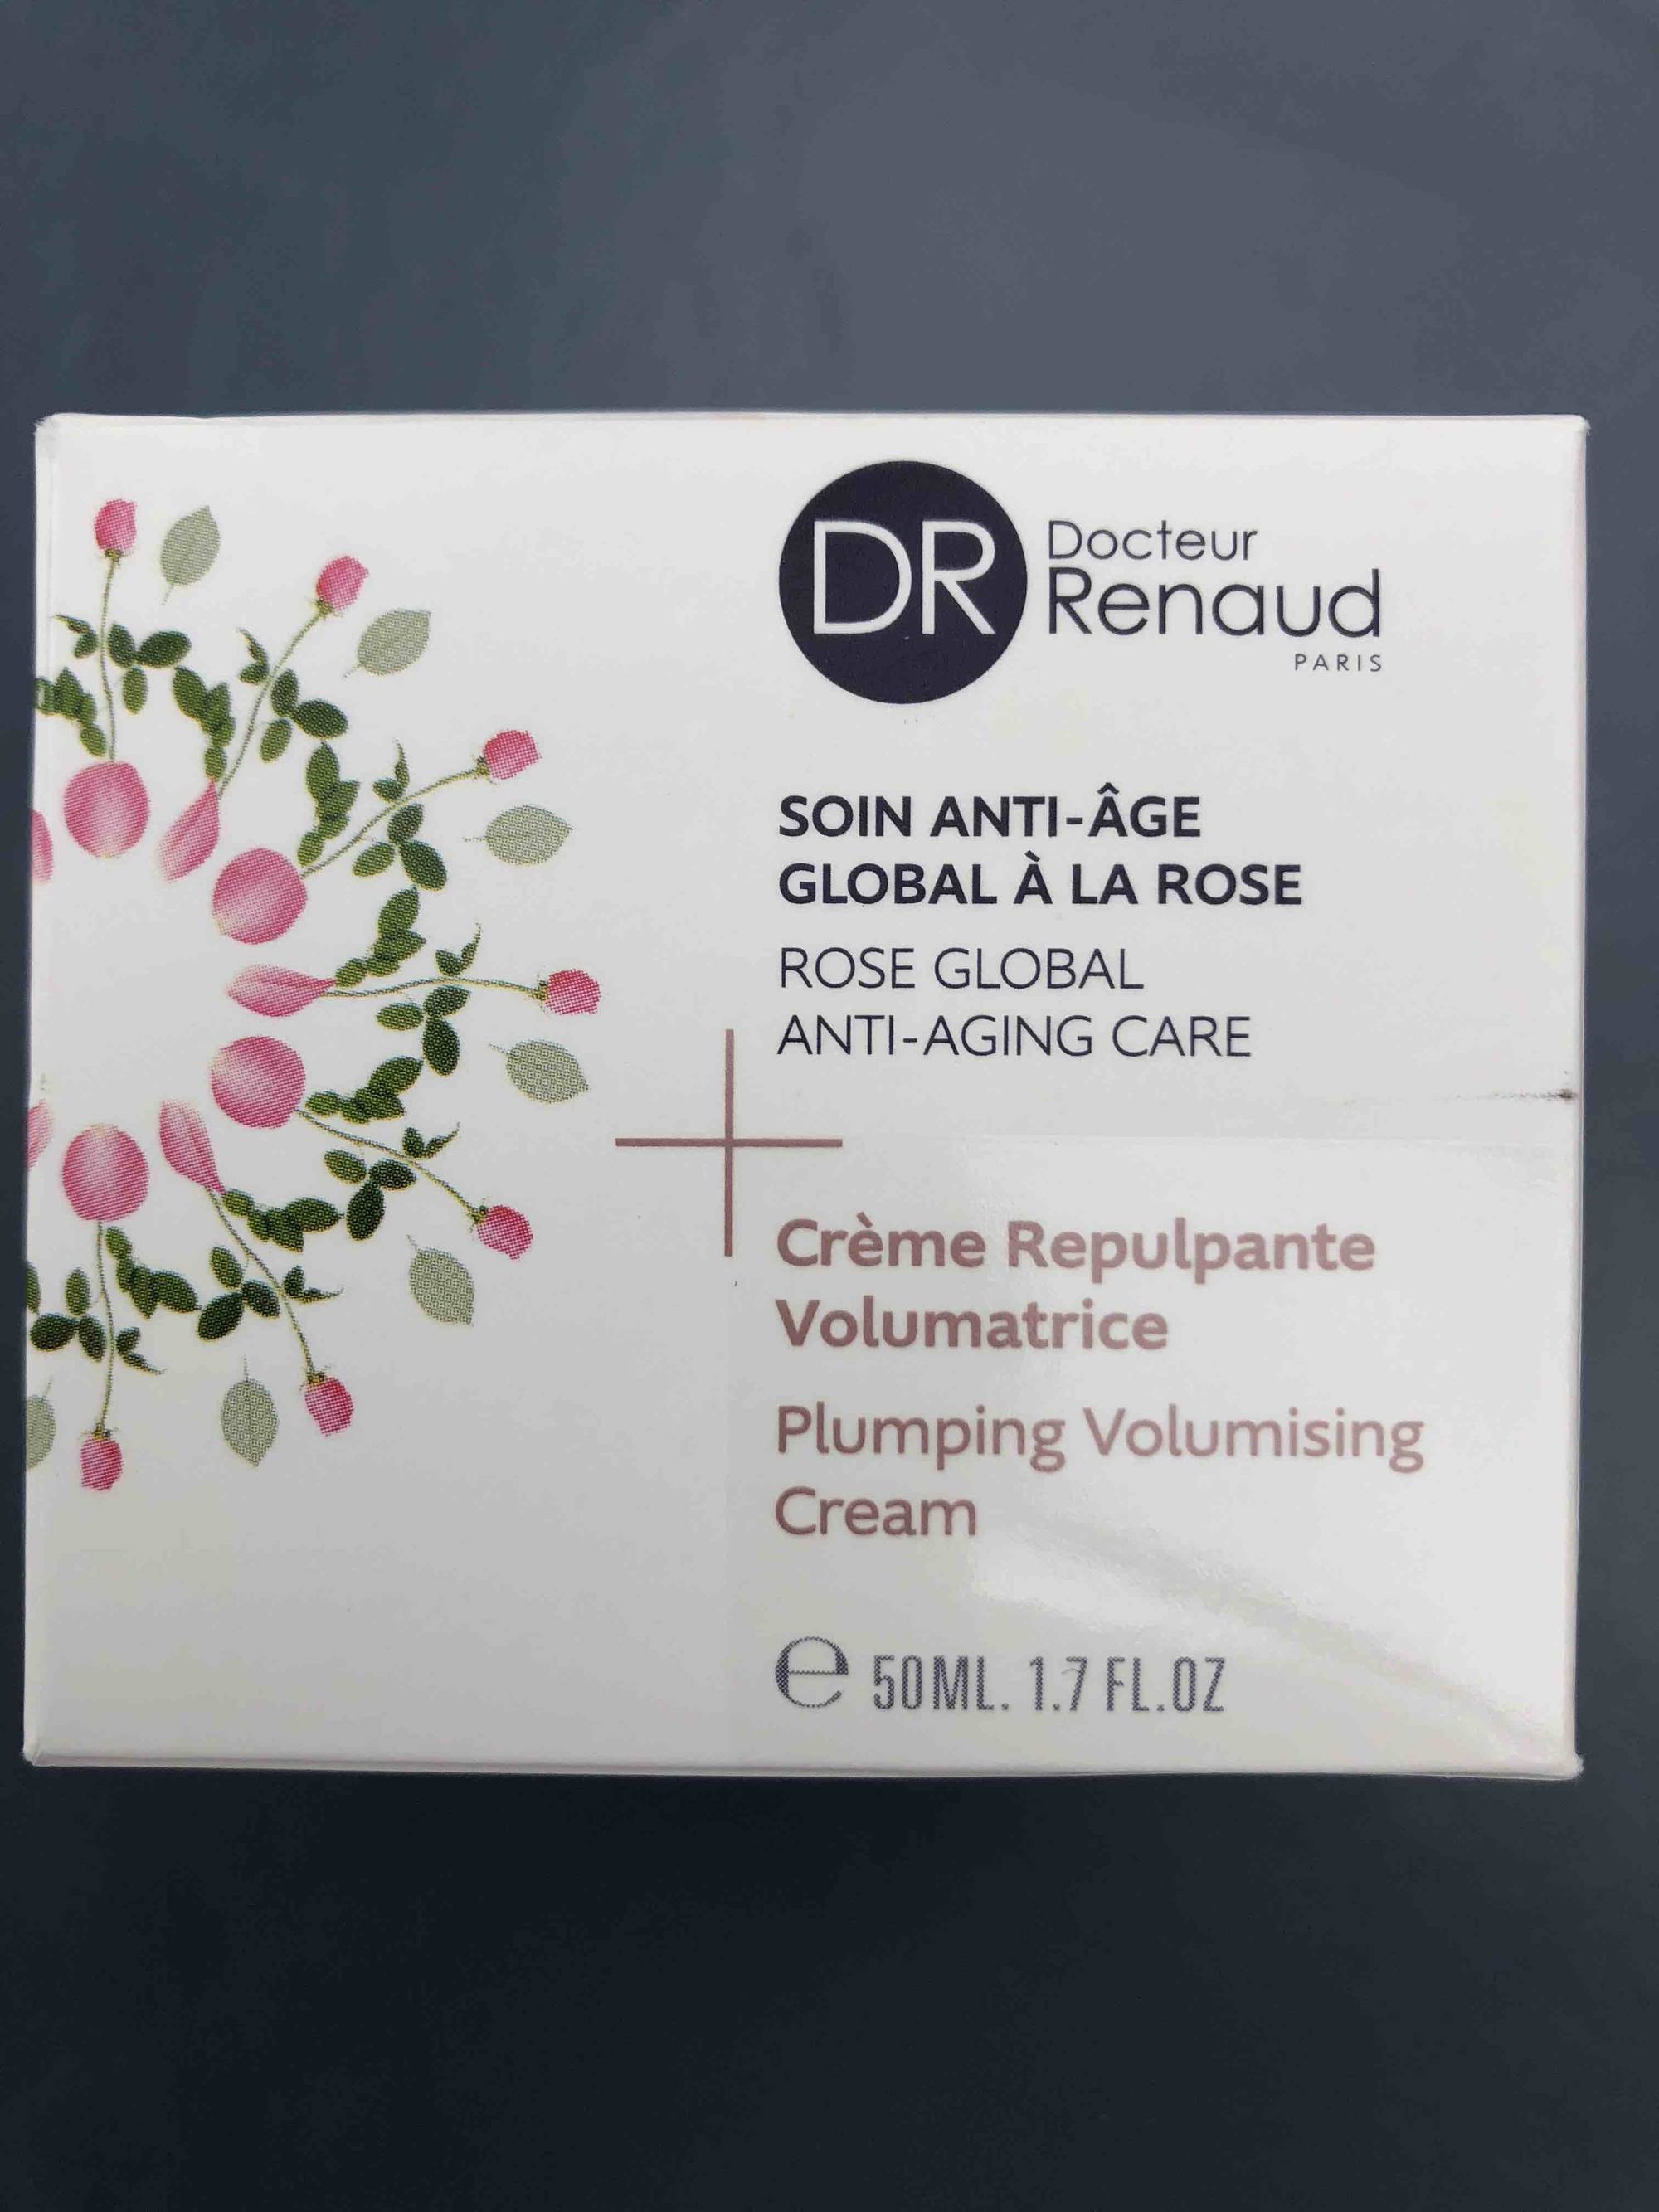 DR RENAUD - Crème Repulpante volumatrice - Soin anti-âge globale à la rose